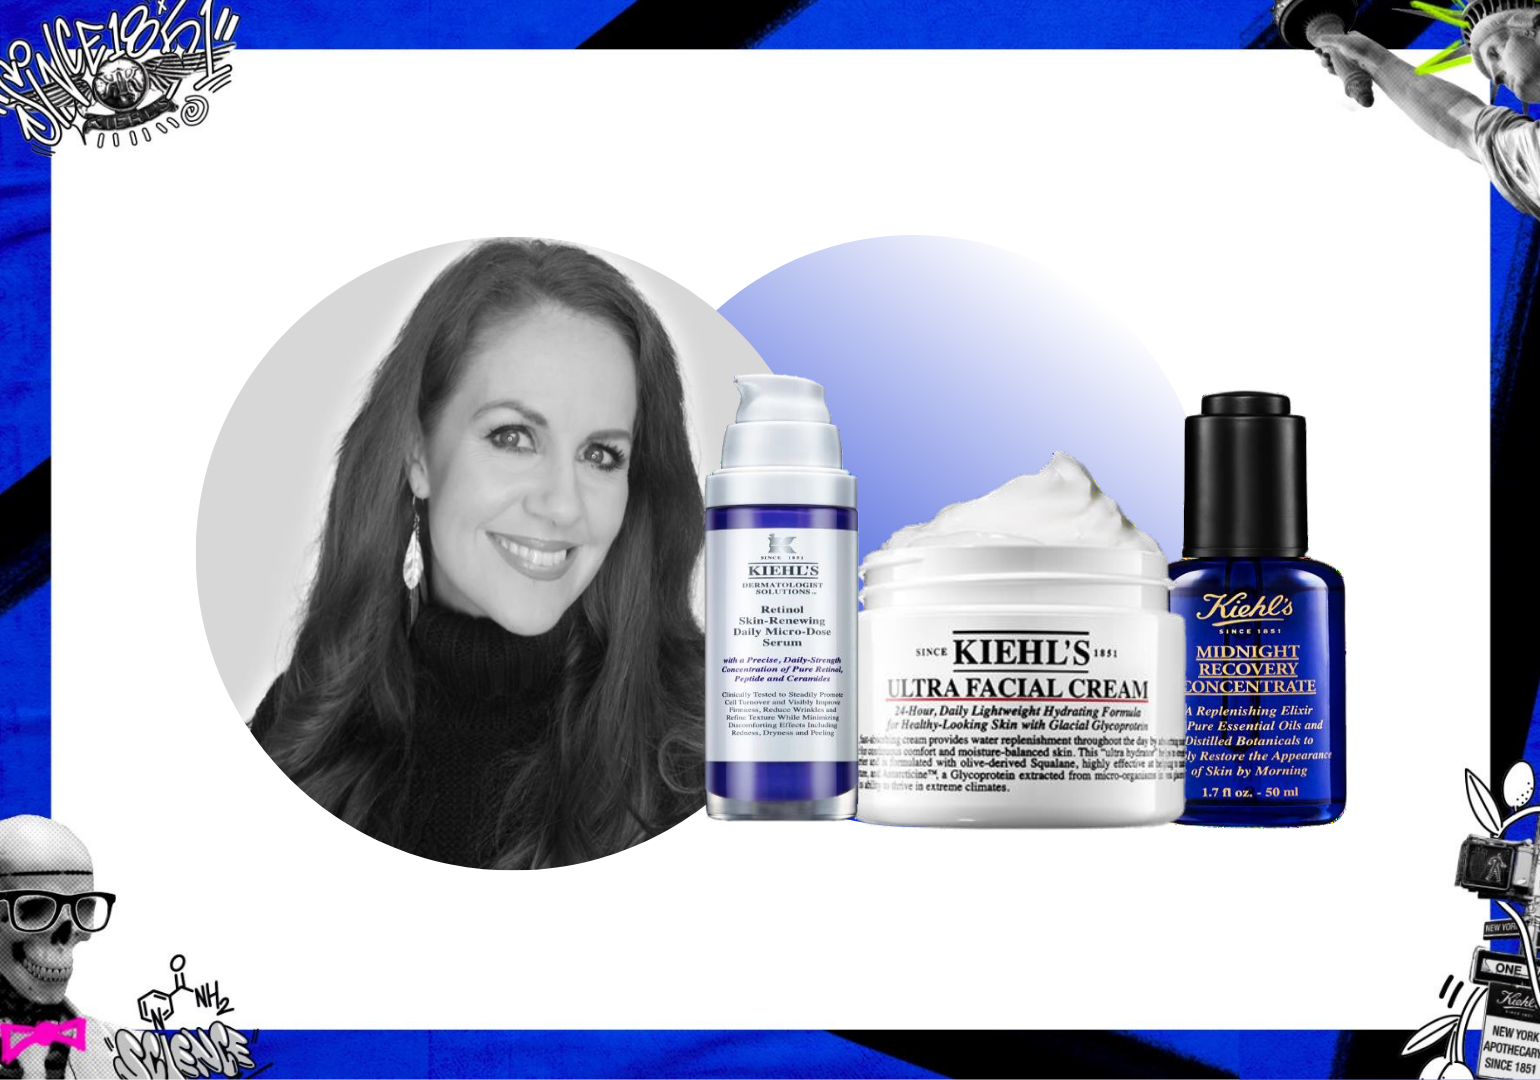  KIEHL’S Skincare Masterclass With Lorraine Lynch